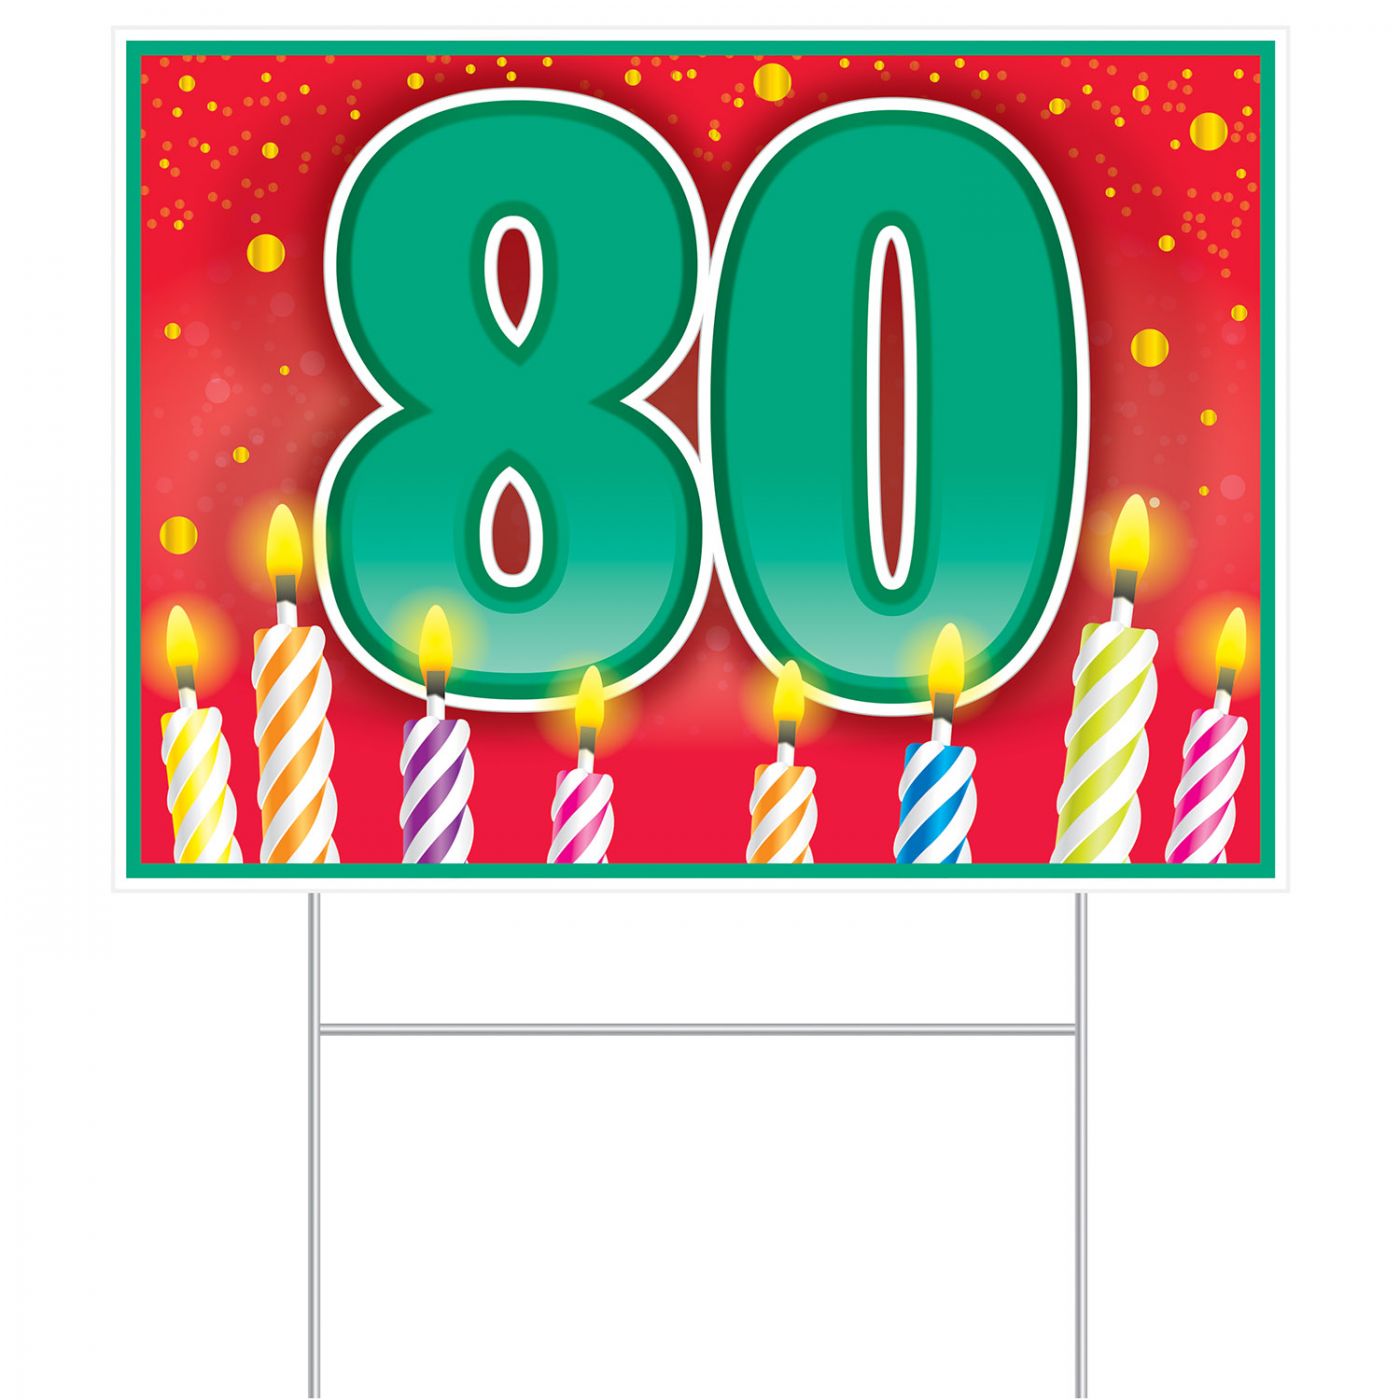 PLASTIC  80  BIRTHDAY YARD SIGN (6) image